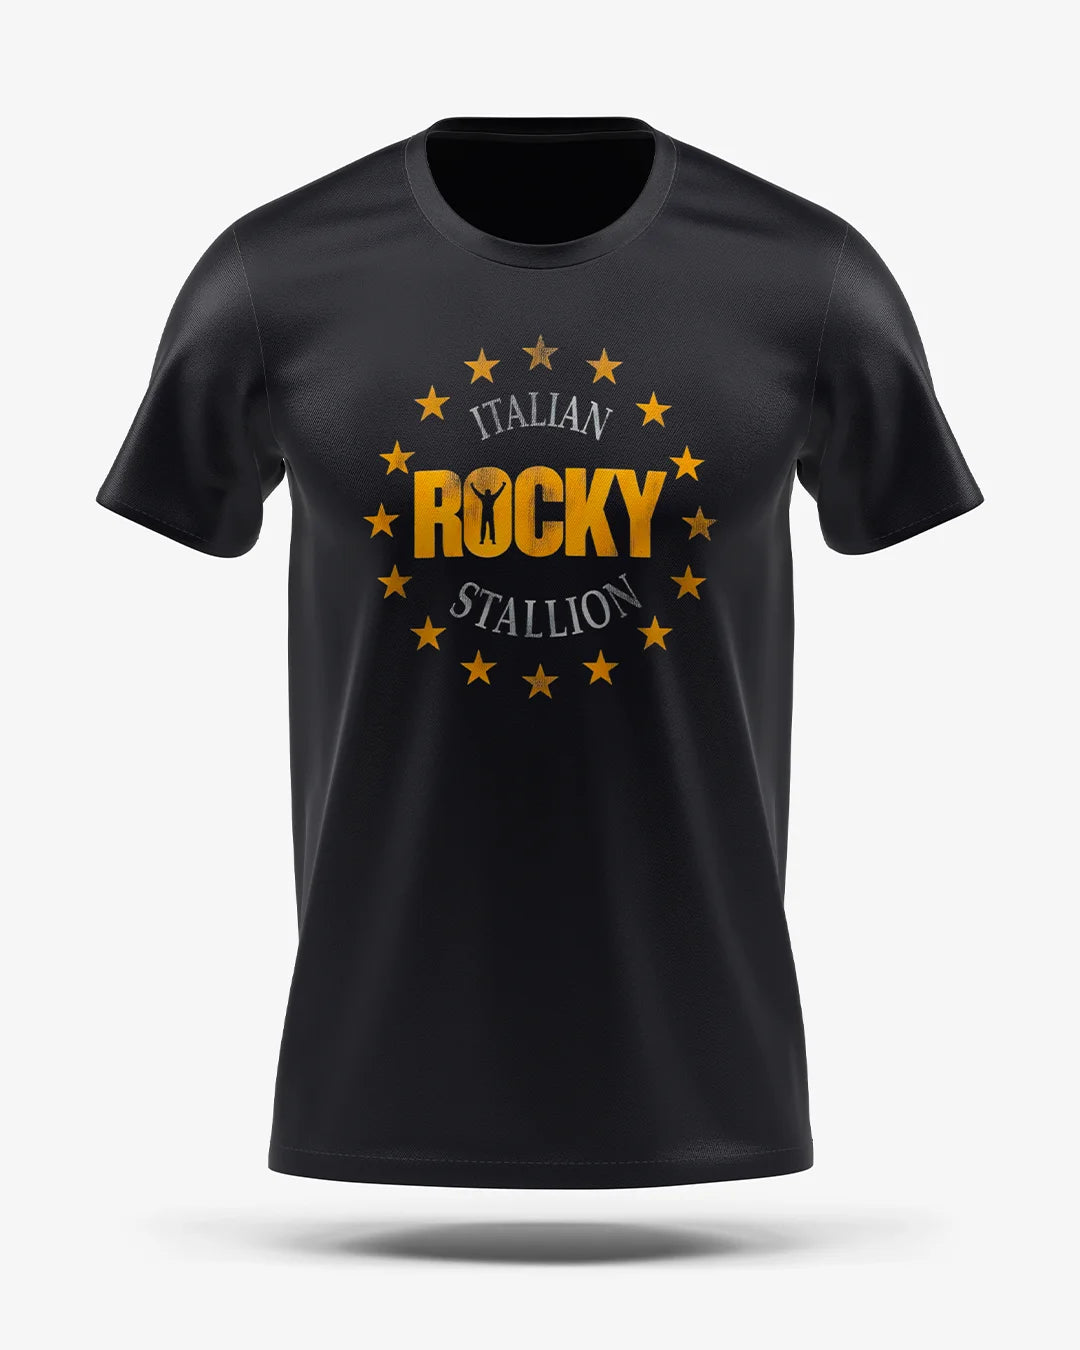 Camiseta Esporte Dry Fit - Rocky Italian Stallion Star